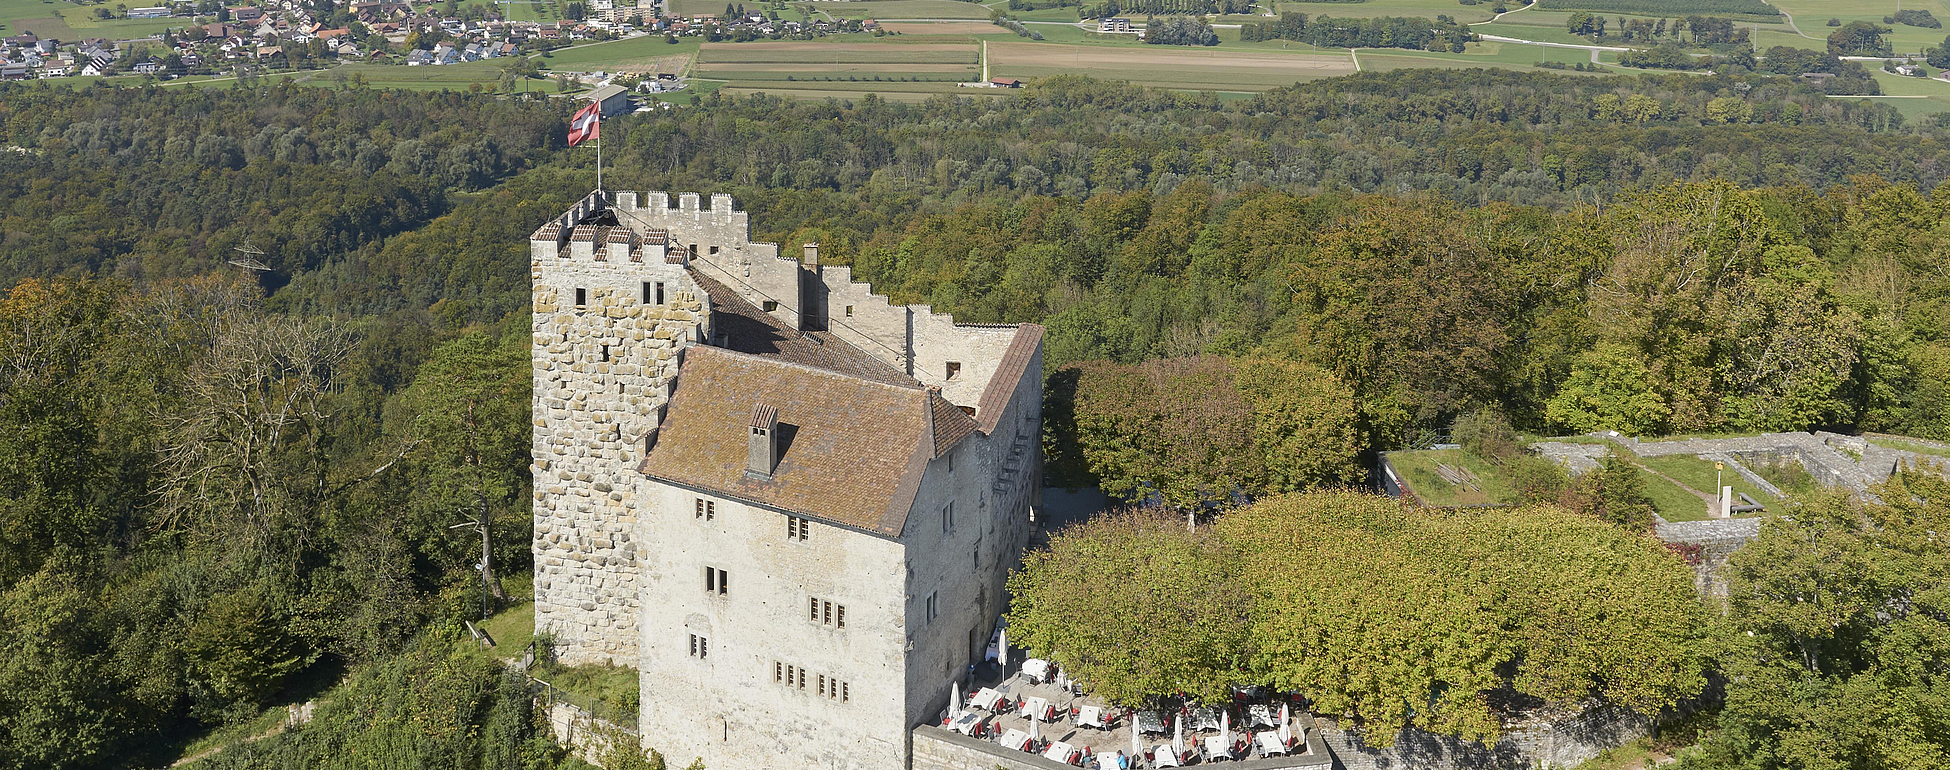 Habsburg Castle